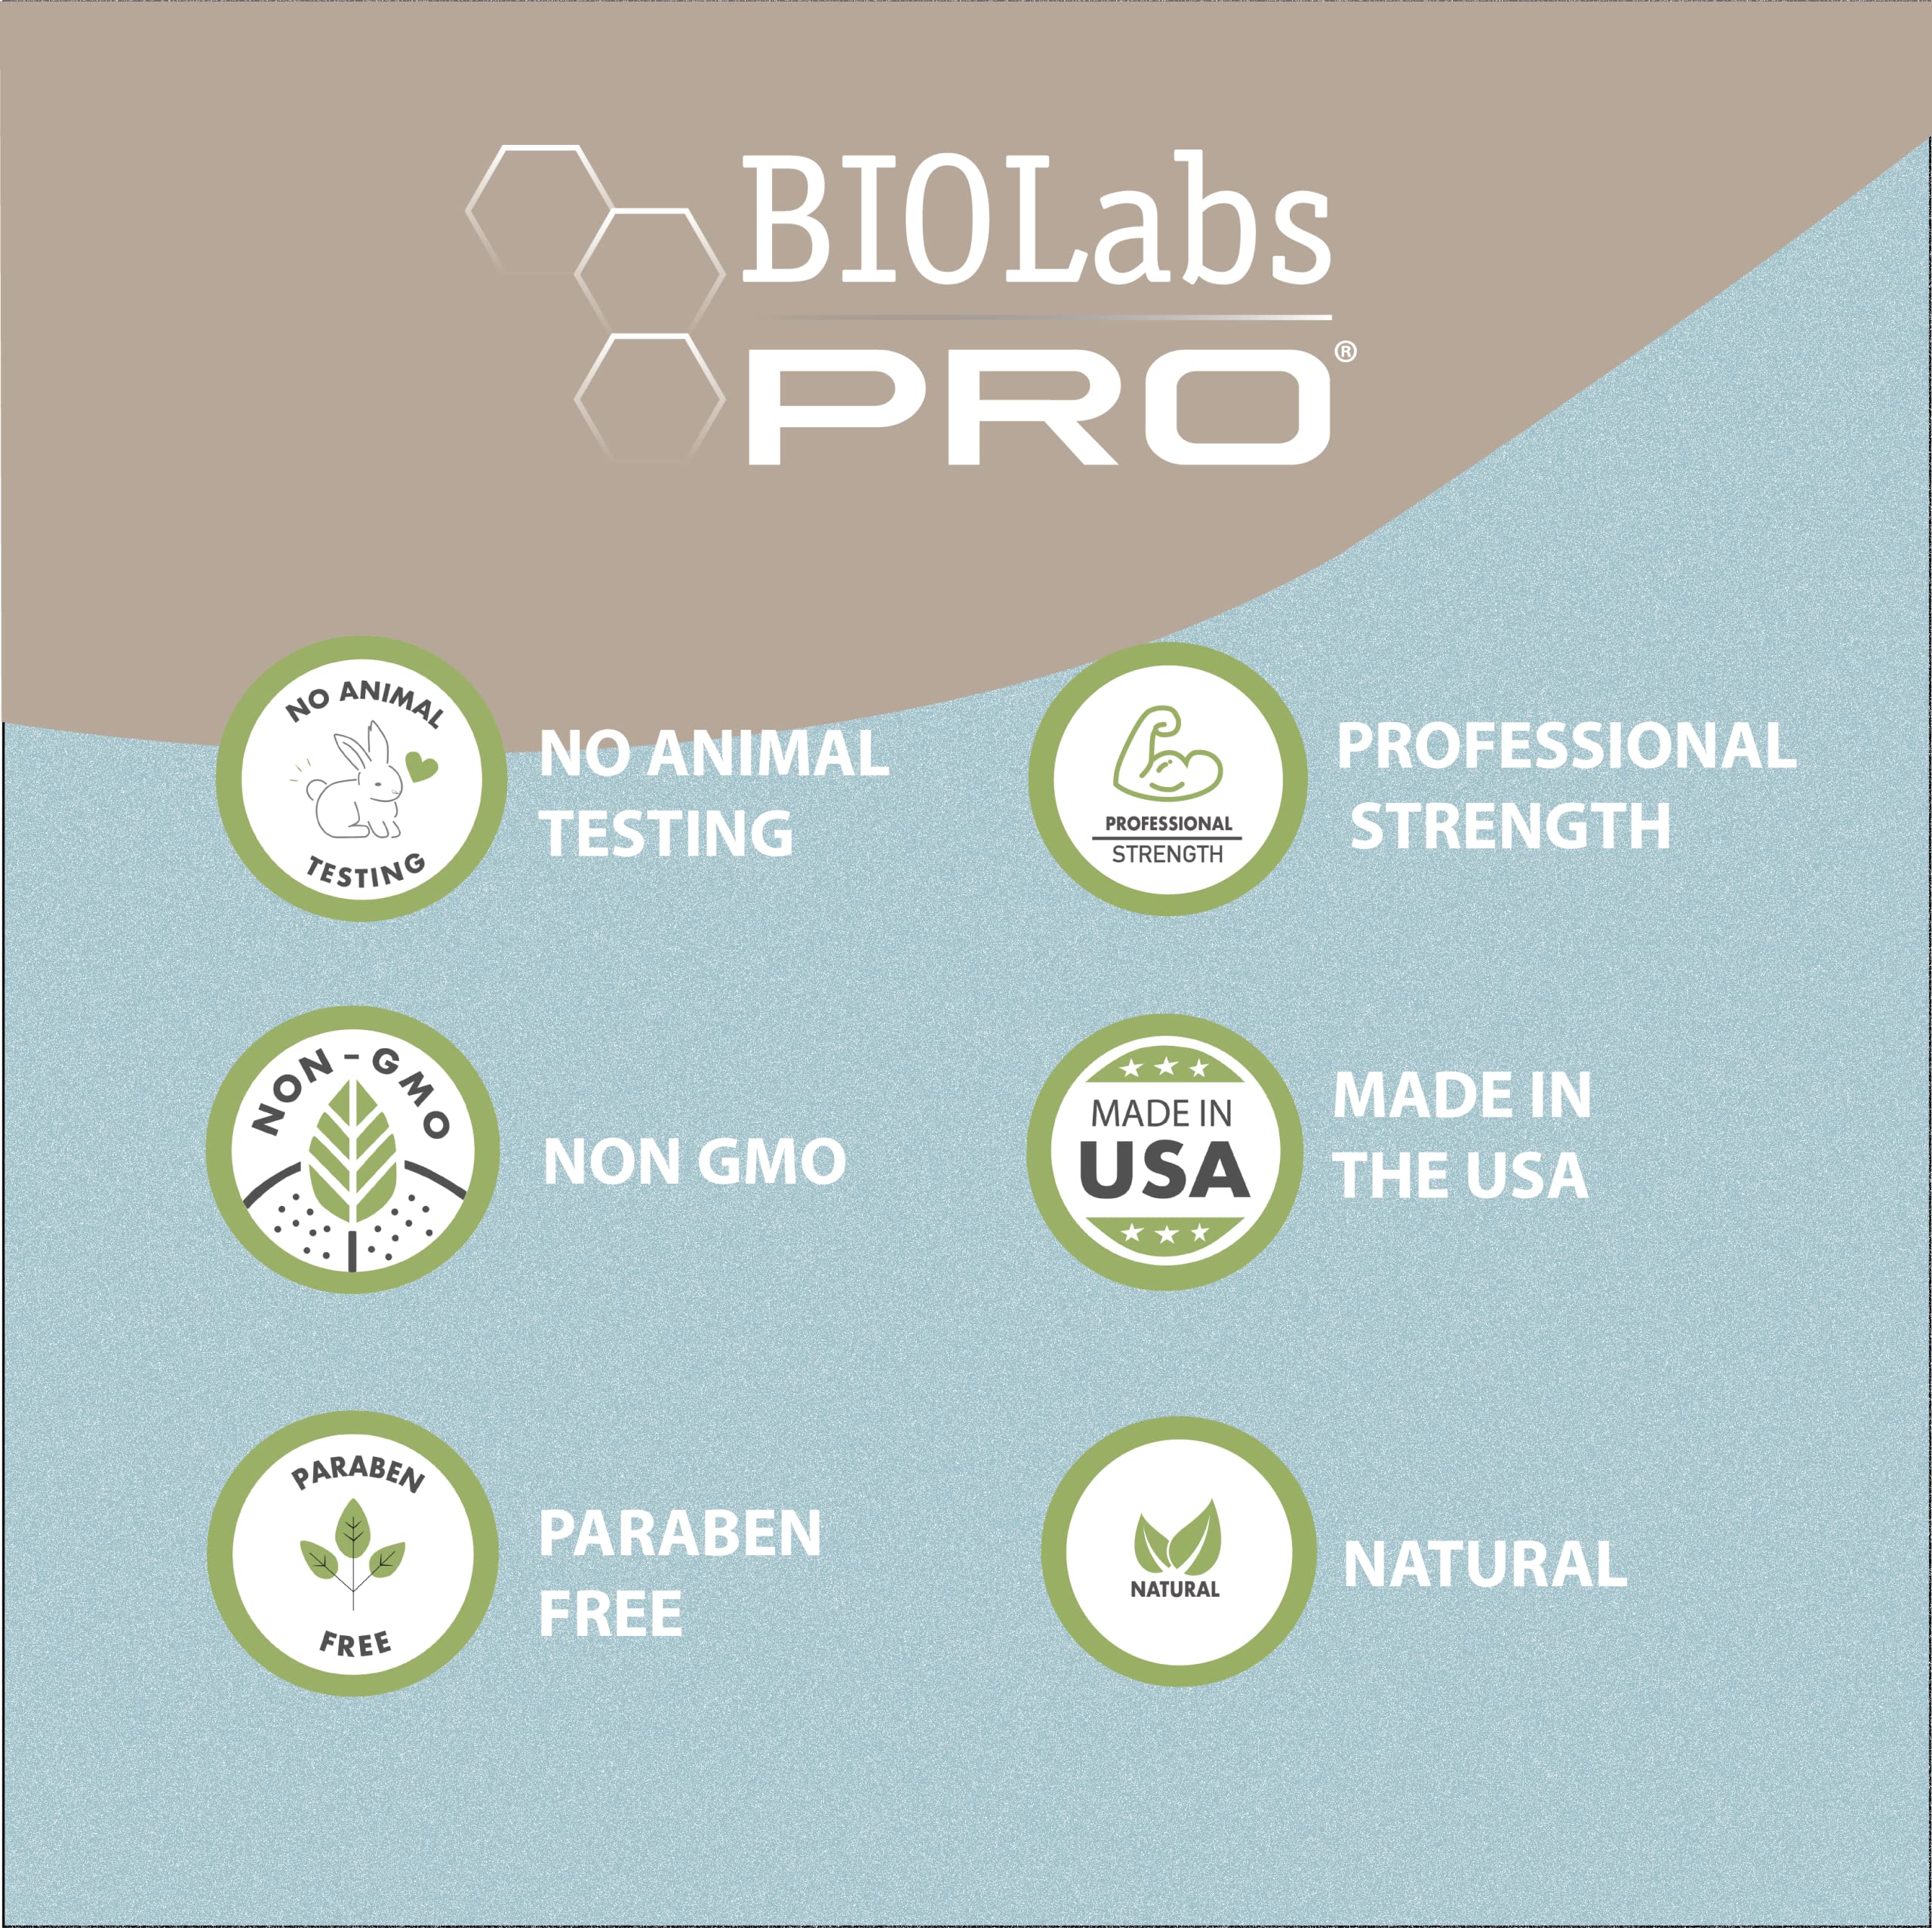 BIOLABS PRO Natural Bioidentical Bi-EST 5.0 Cream For Women, Three Month Supply (3.6 oz - Unscented)